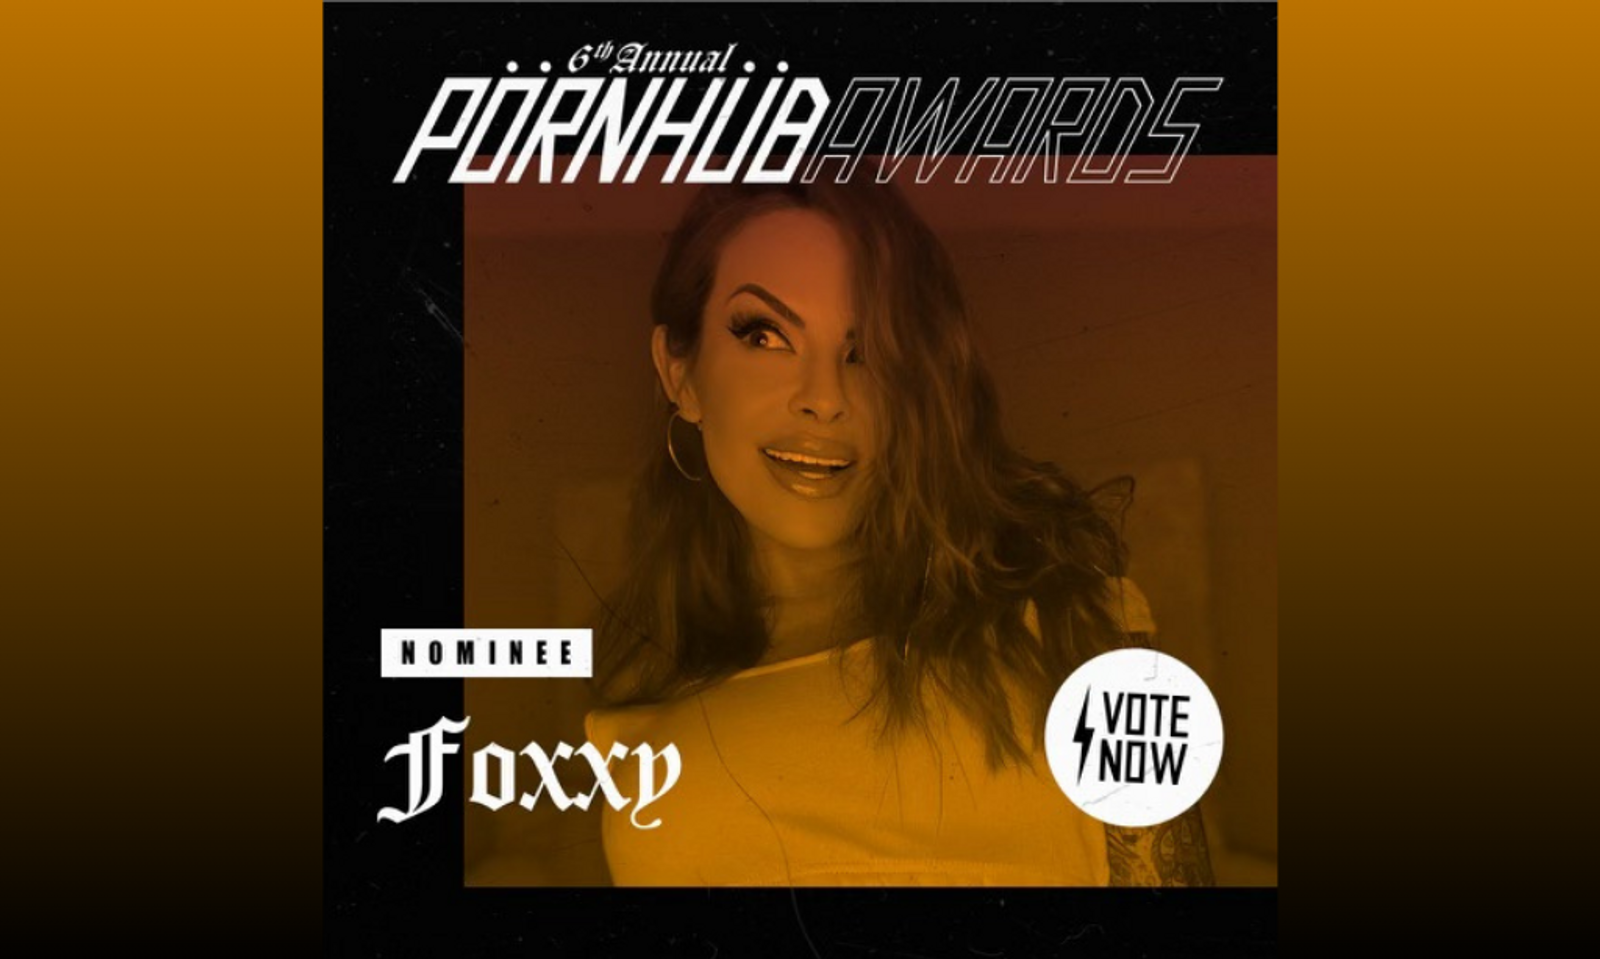 Foxxy Receives Two Pornhub Award Nominations